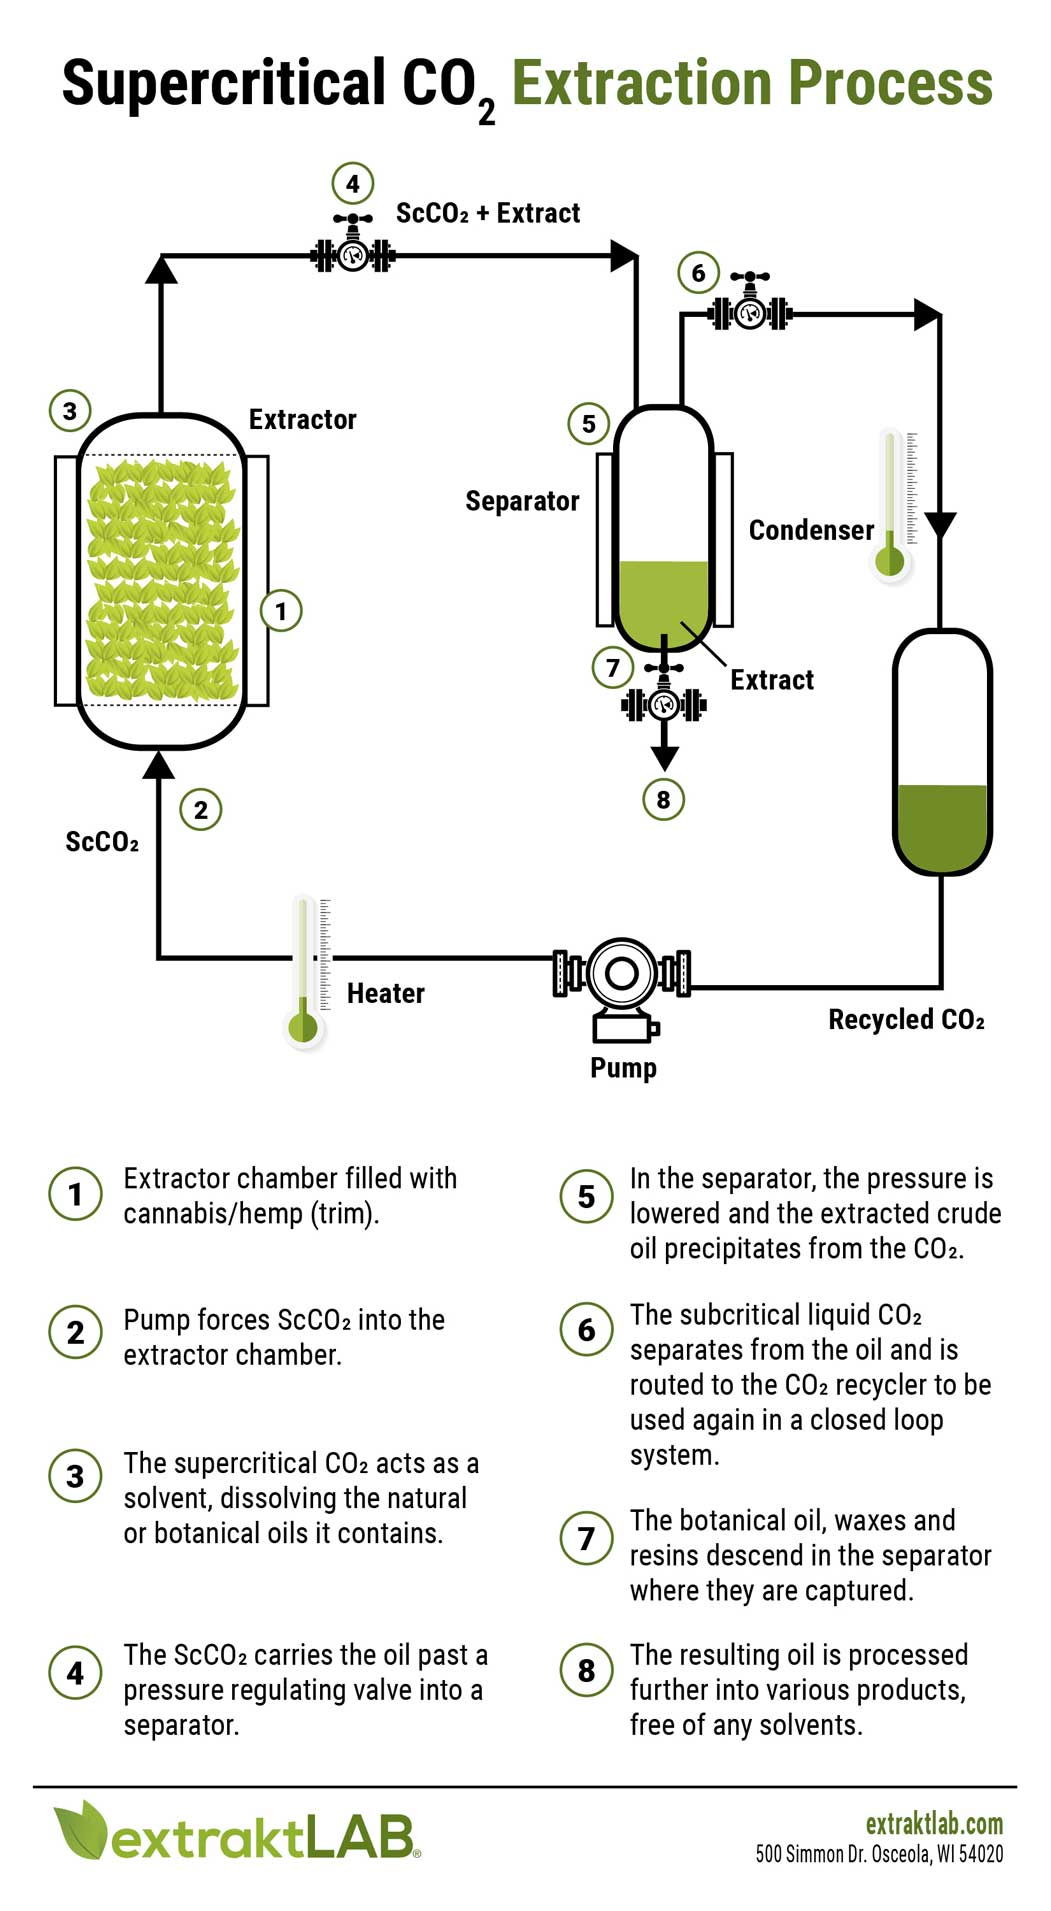 scco2-extraction-process-explanation